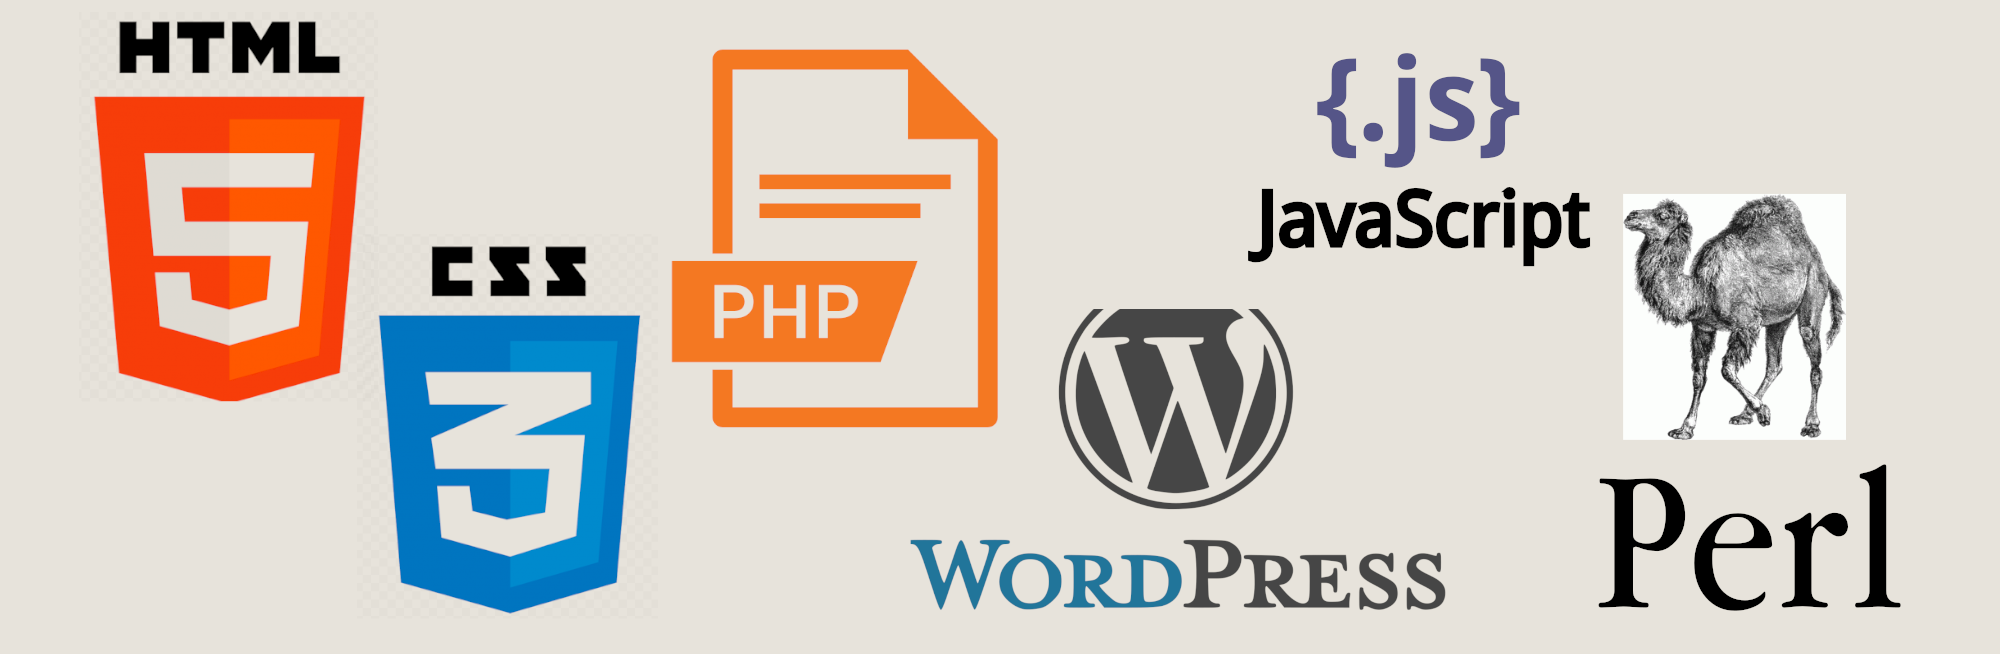 html perl css javaScript wordpress